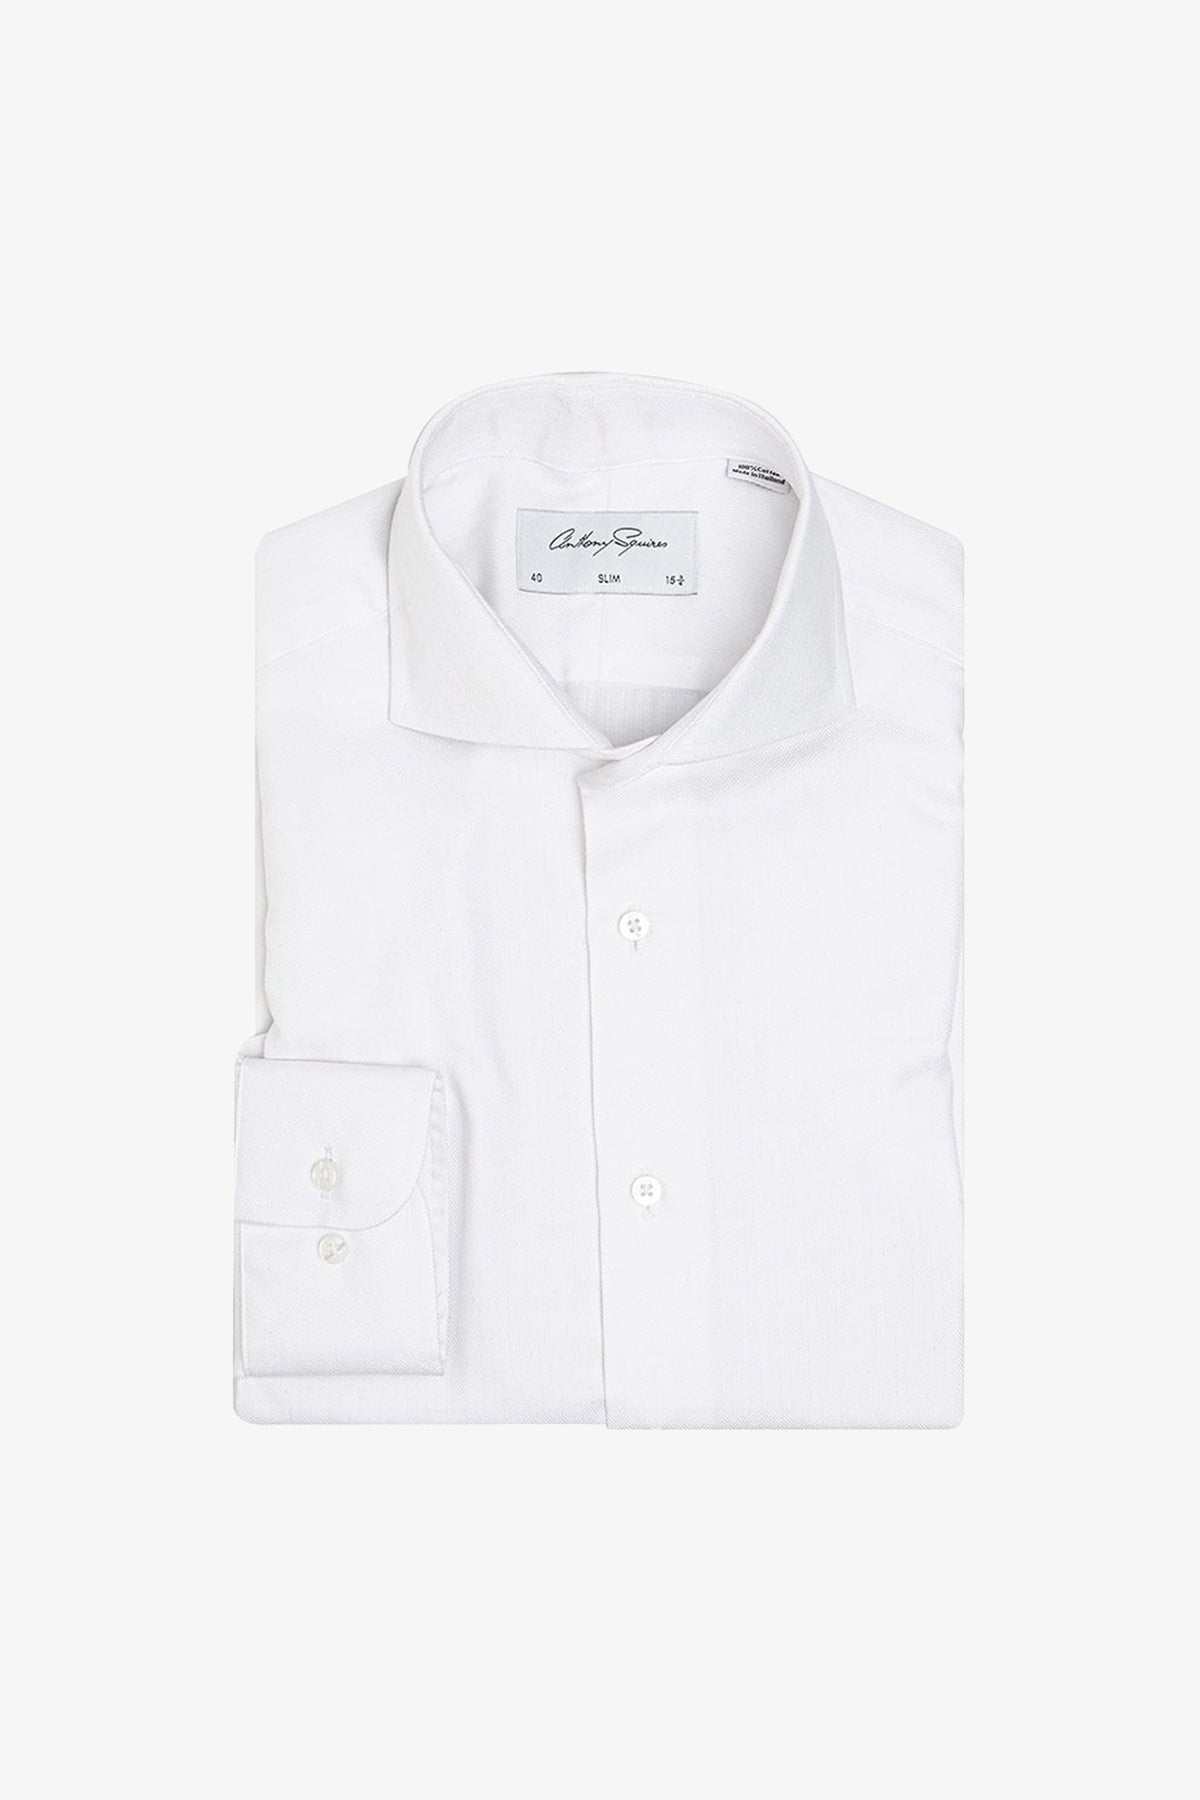 Alton - White Business shirt